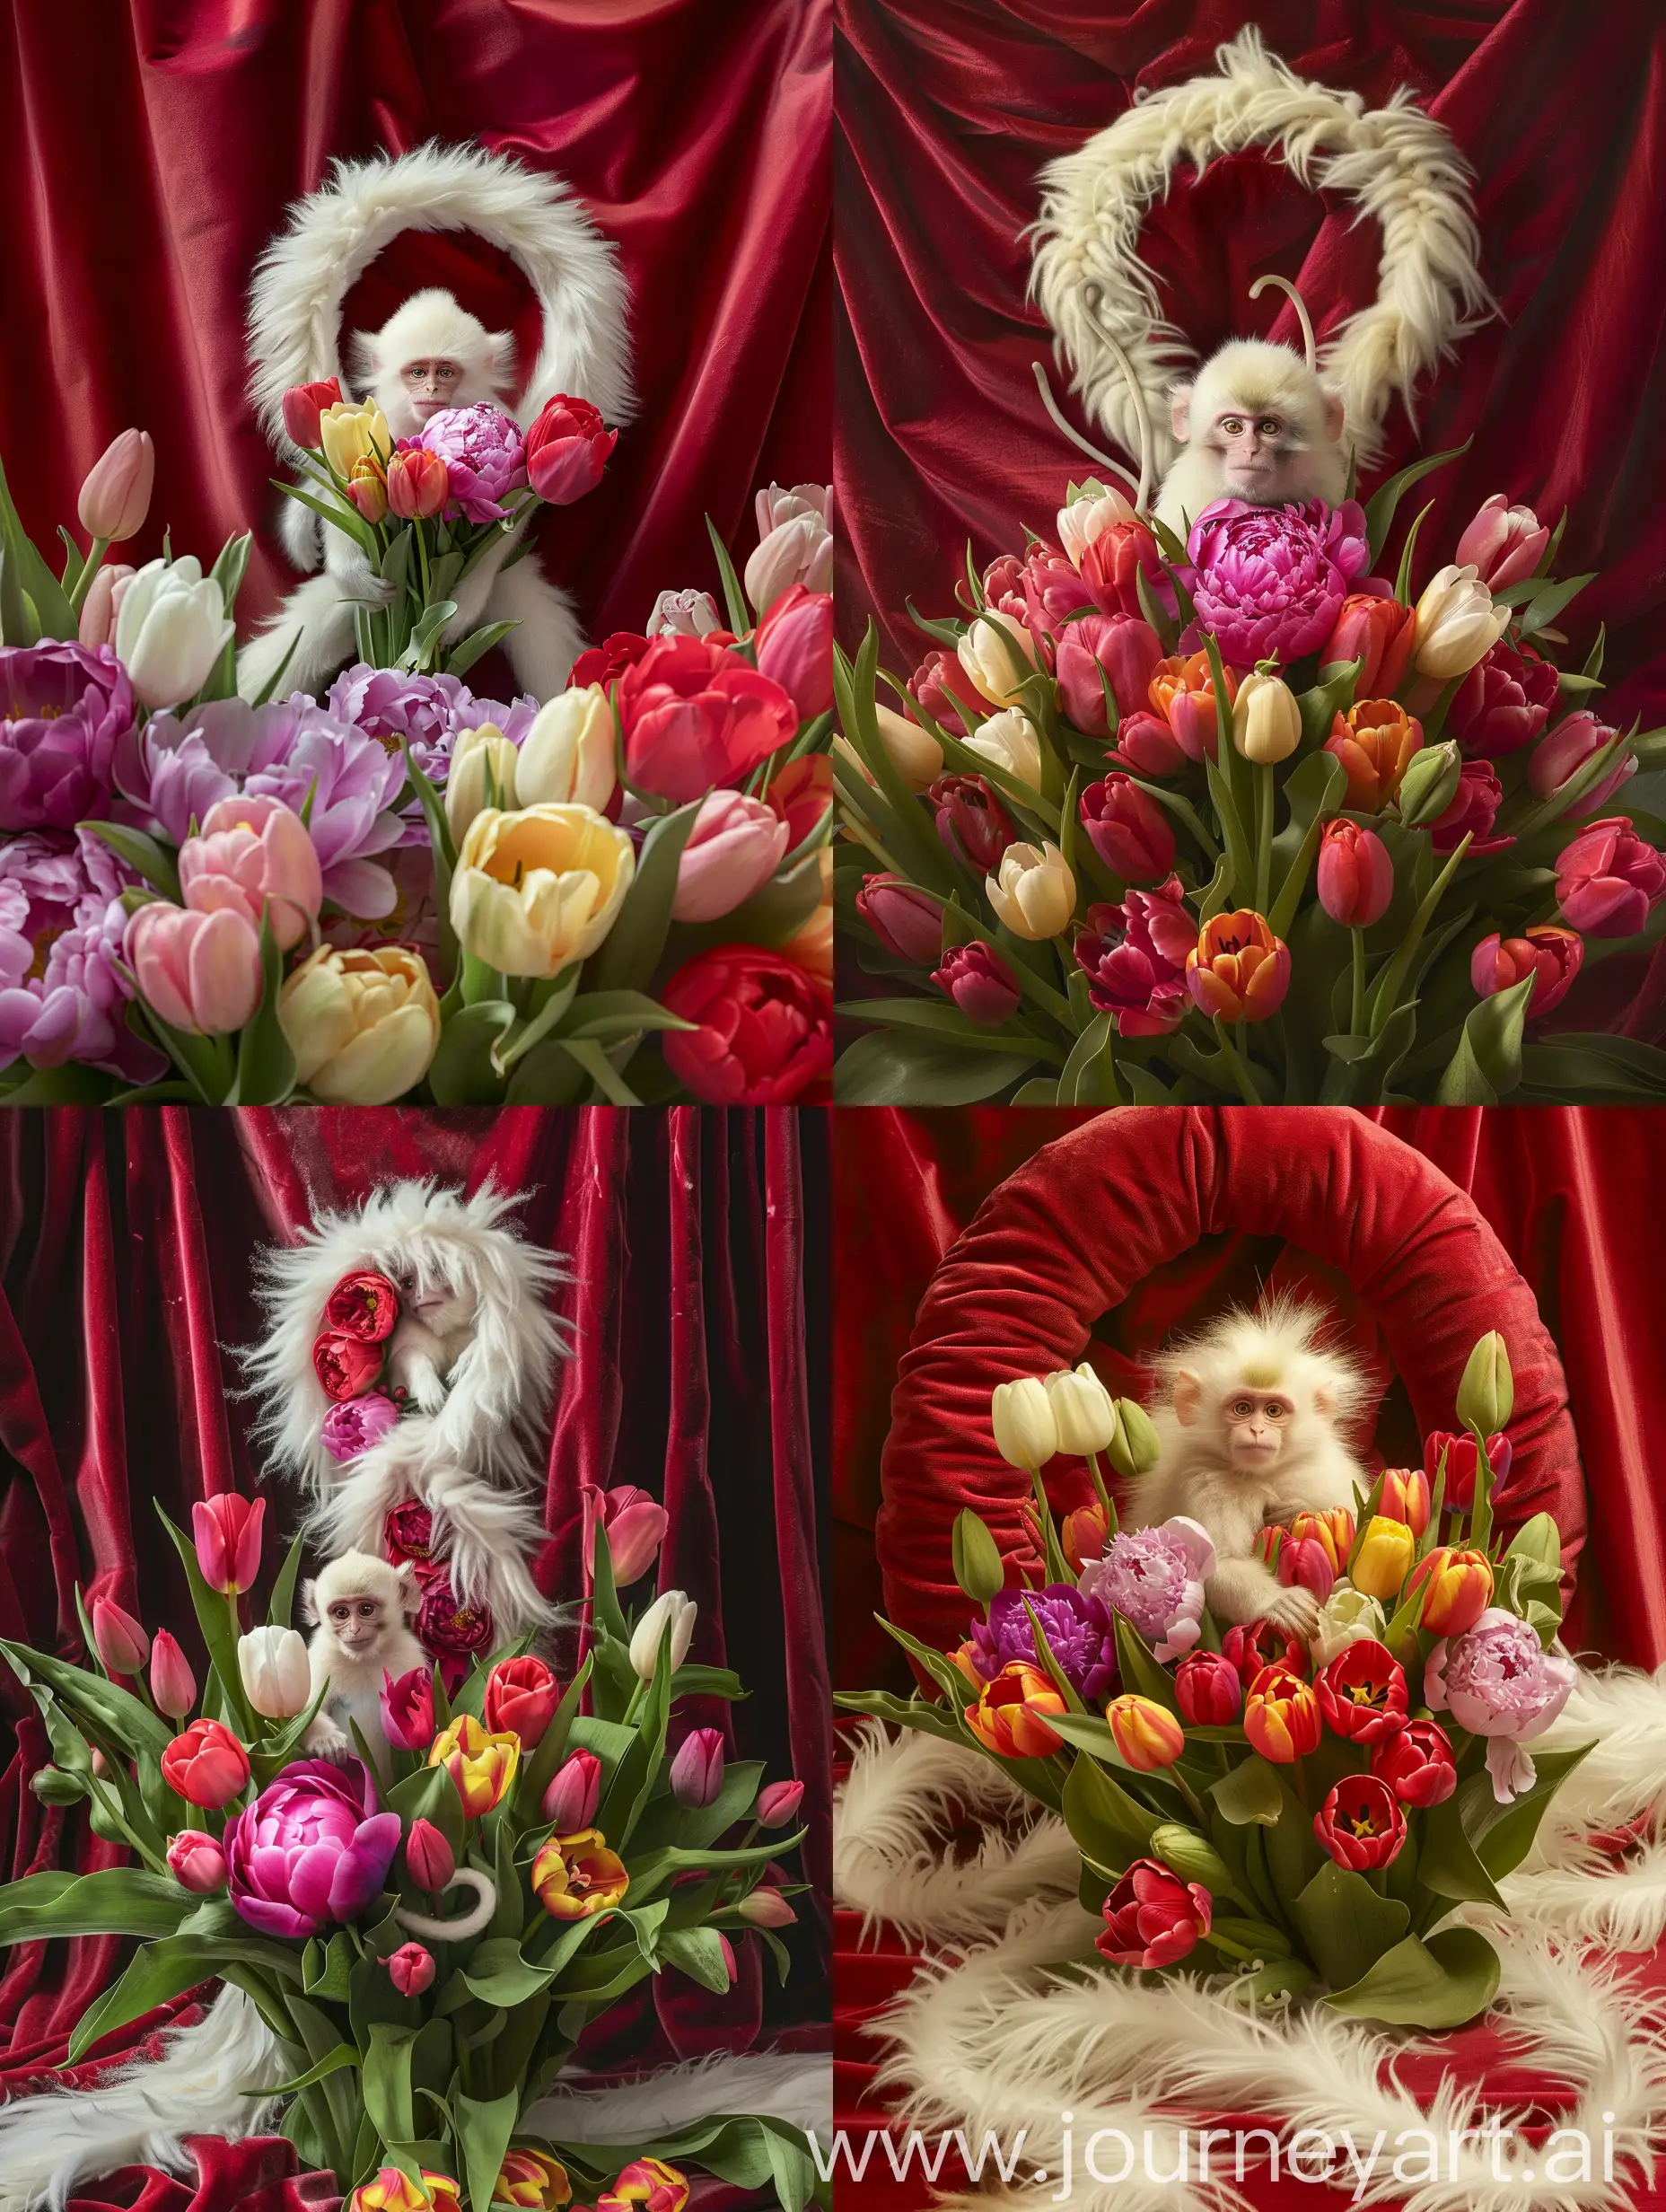 Hyperrealism-Floral-Arrangement-Monkey-in-Tulip-Bouquet-on-Red-Velvet-Figure-Eight-Background